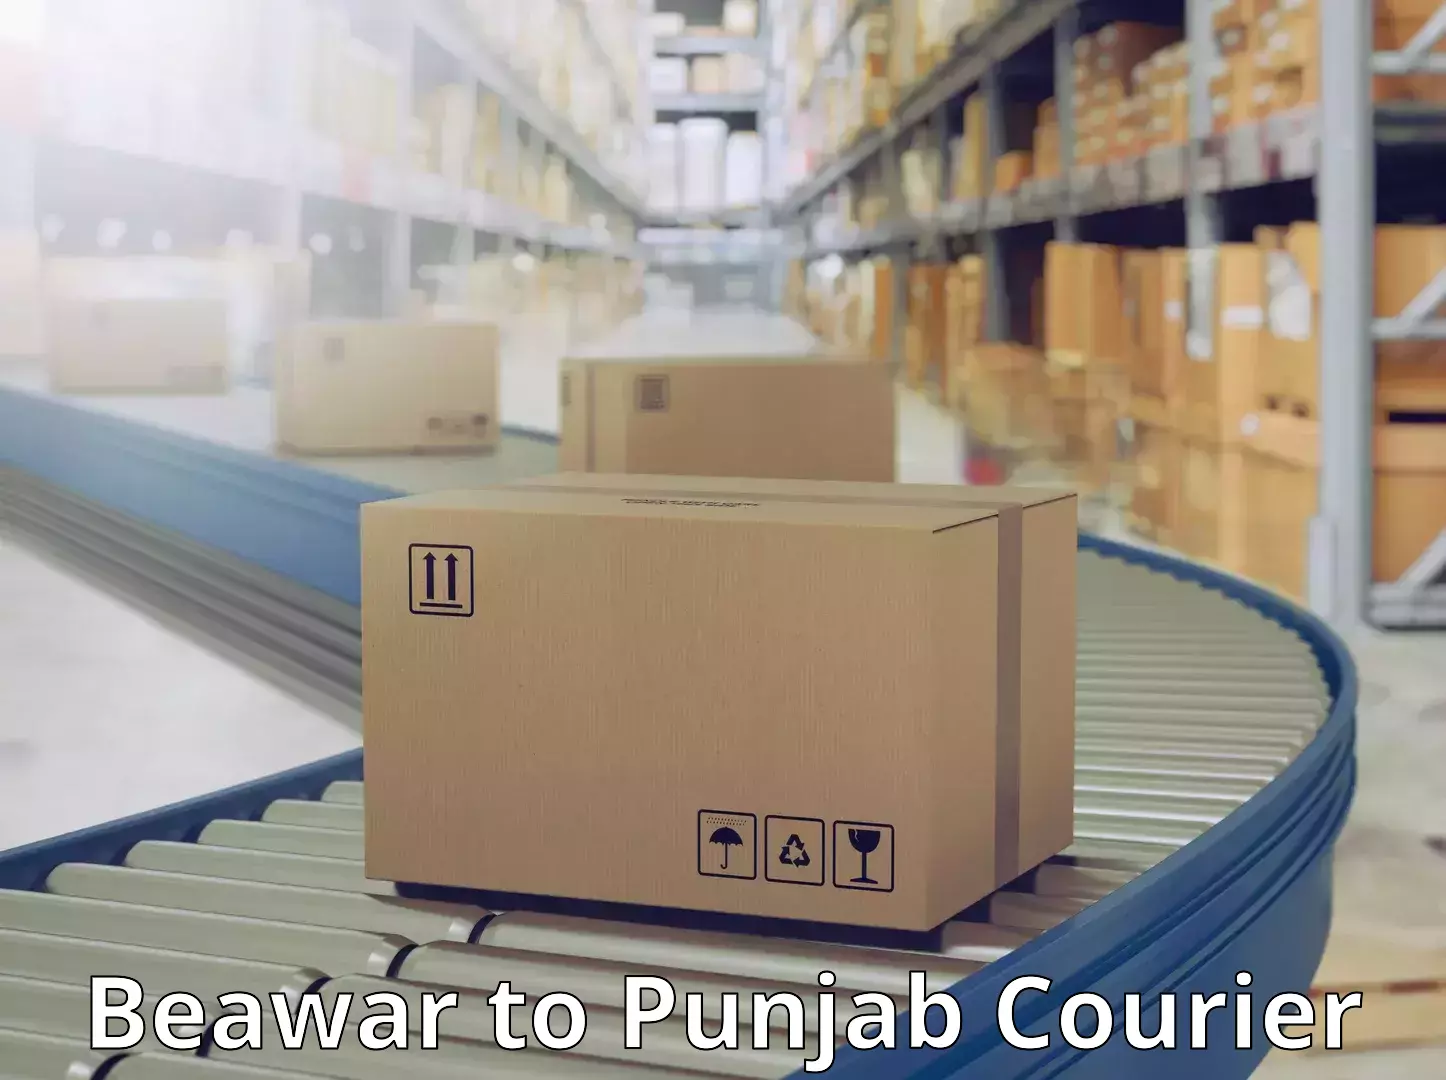 Courier service partnerships Beawar to Bagha Purana